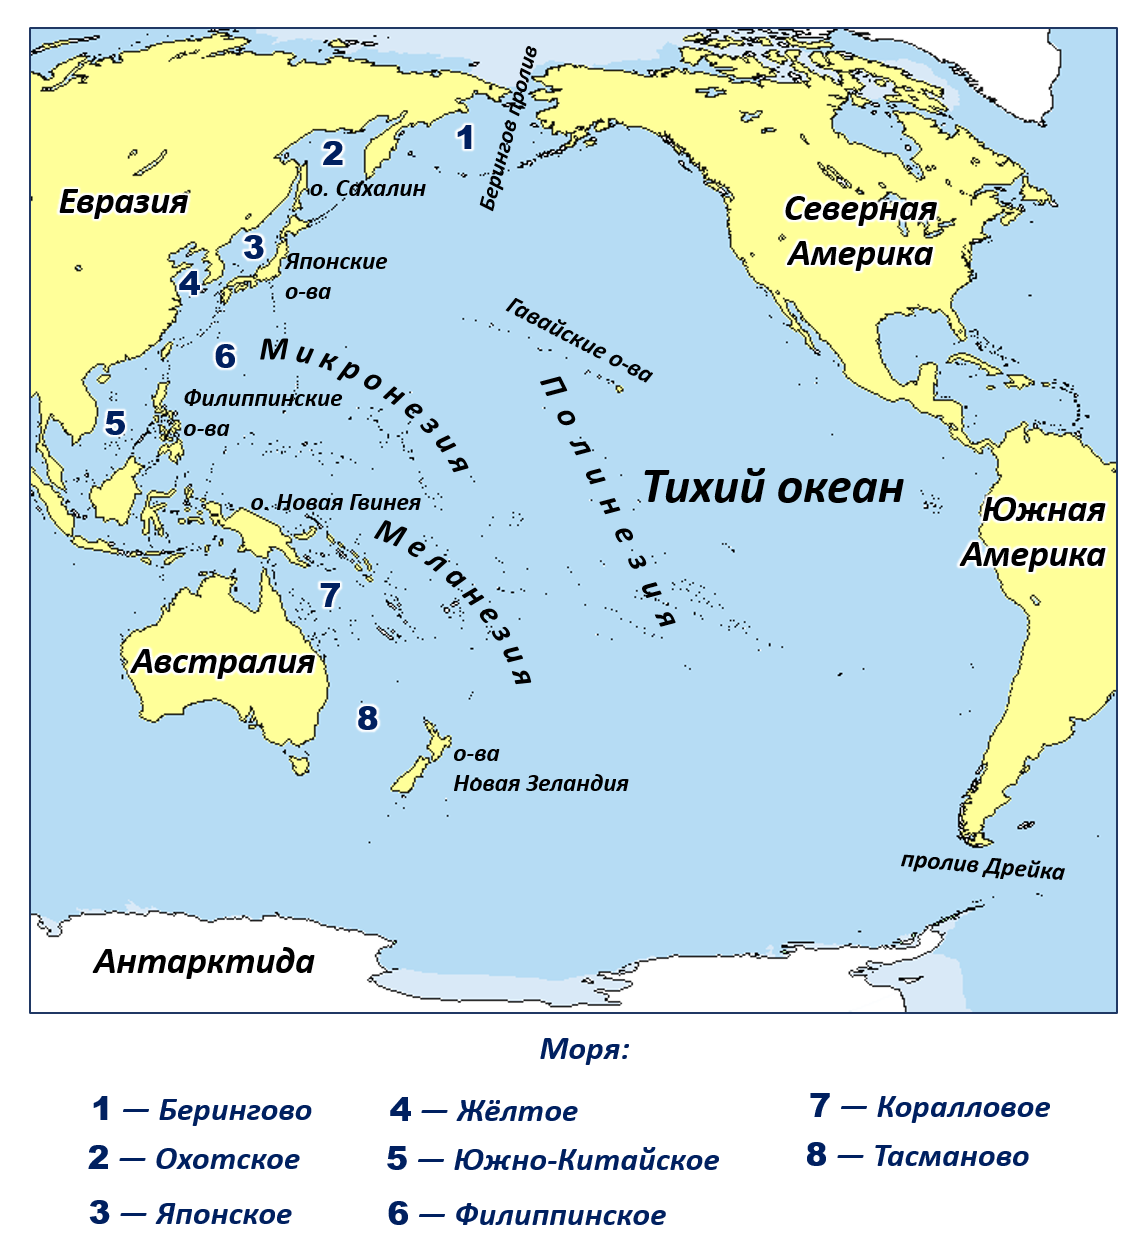 Карта Тихого океана с морями заливами и проливами. Заливы и проливы Тихого океана на карте. Карта Тихого океана на карте. Проливы Тихого океана на карте.